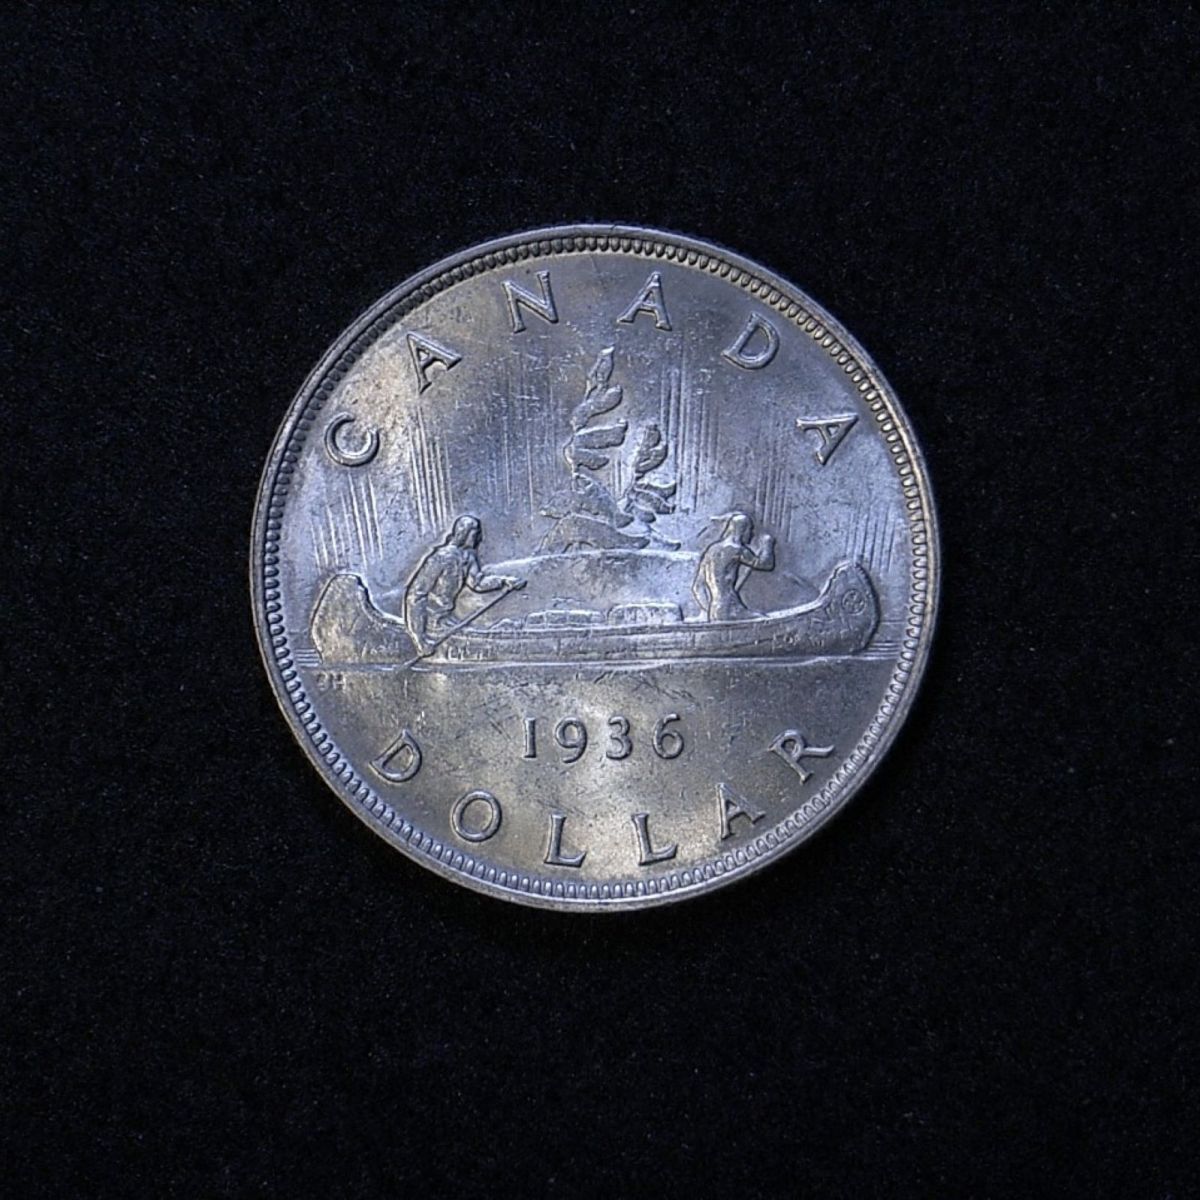 Canada Dollar 1936 reverse